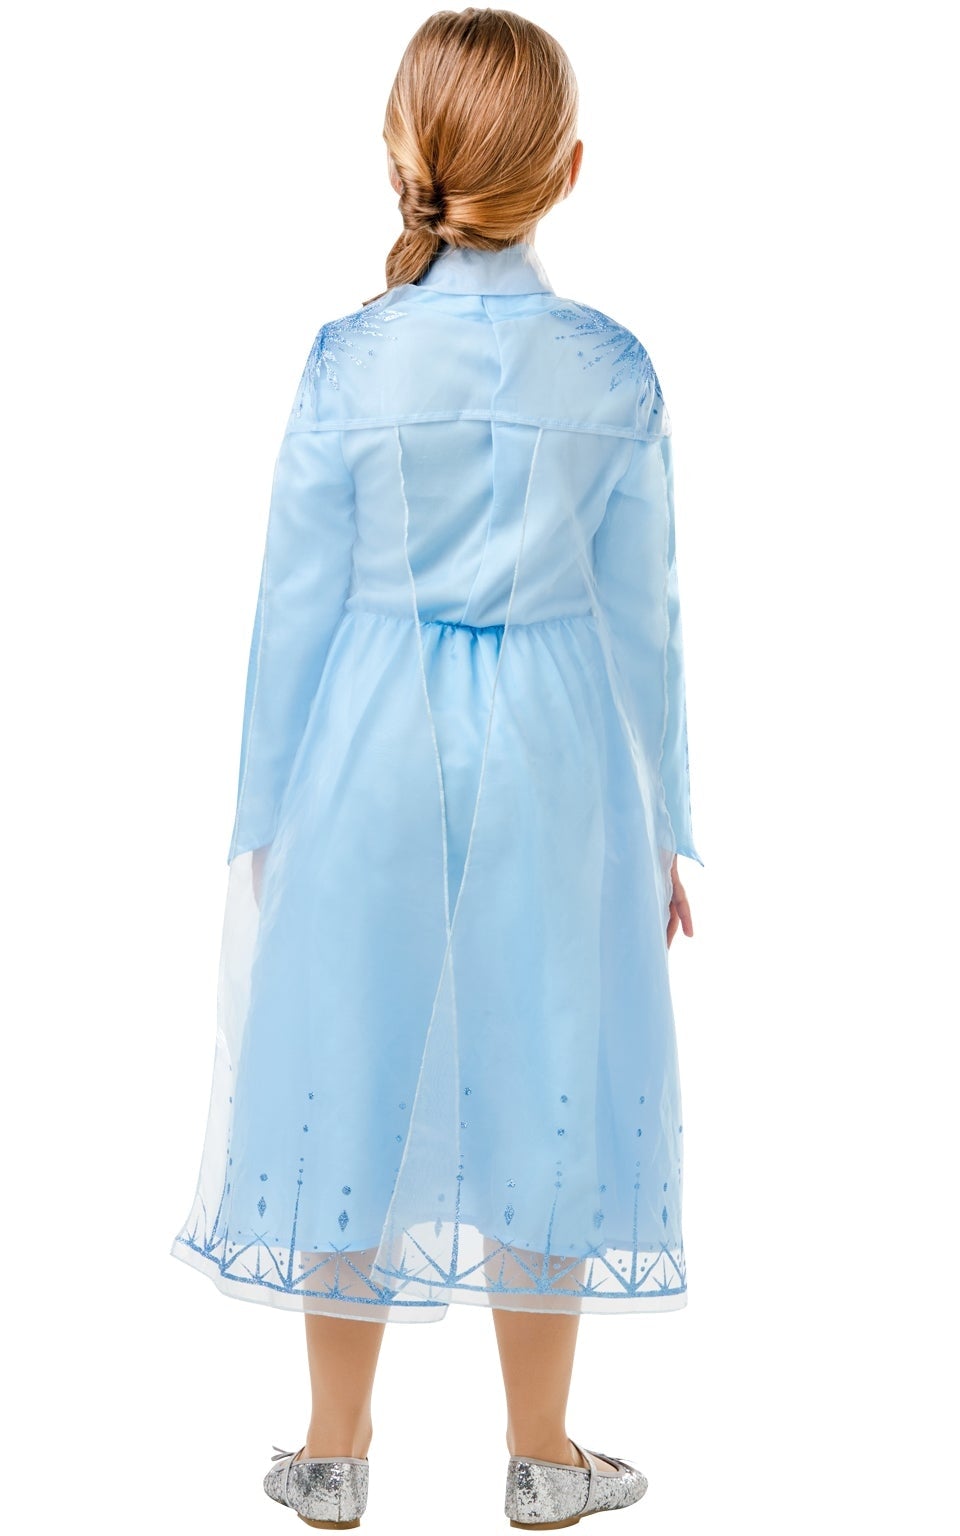 Frozen 2 Elsa Travel Dress Costume_3 rub-3002845-6